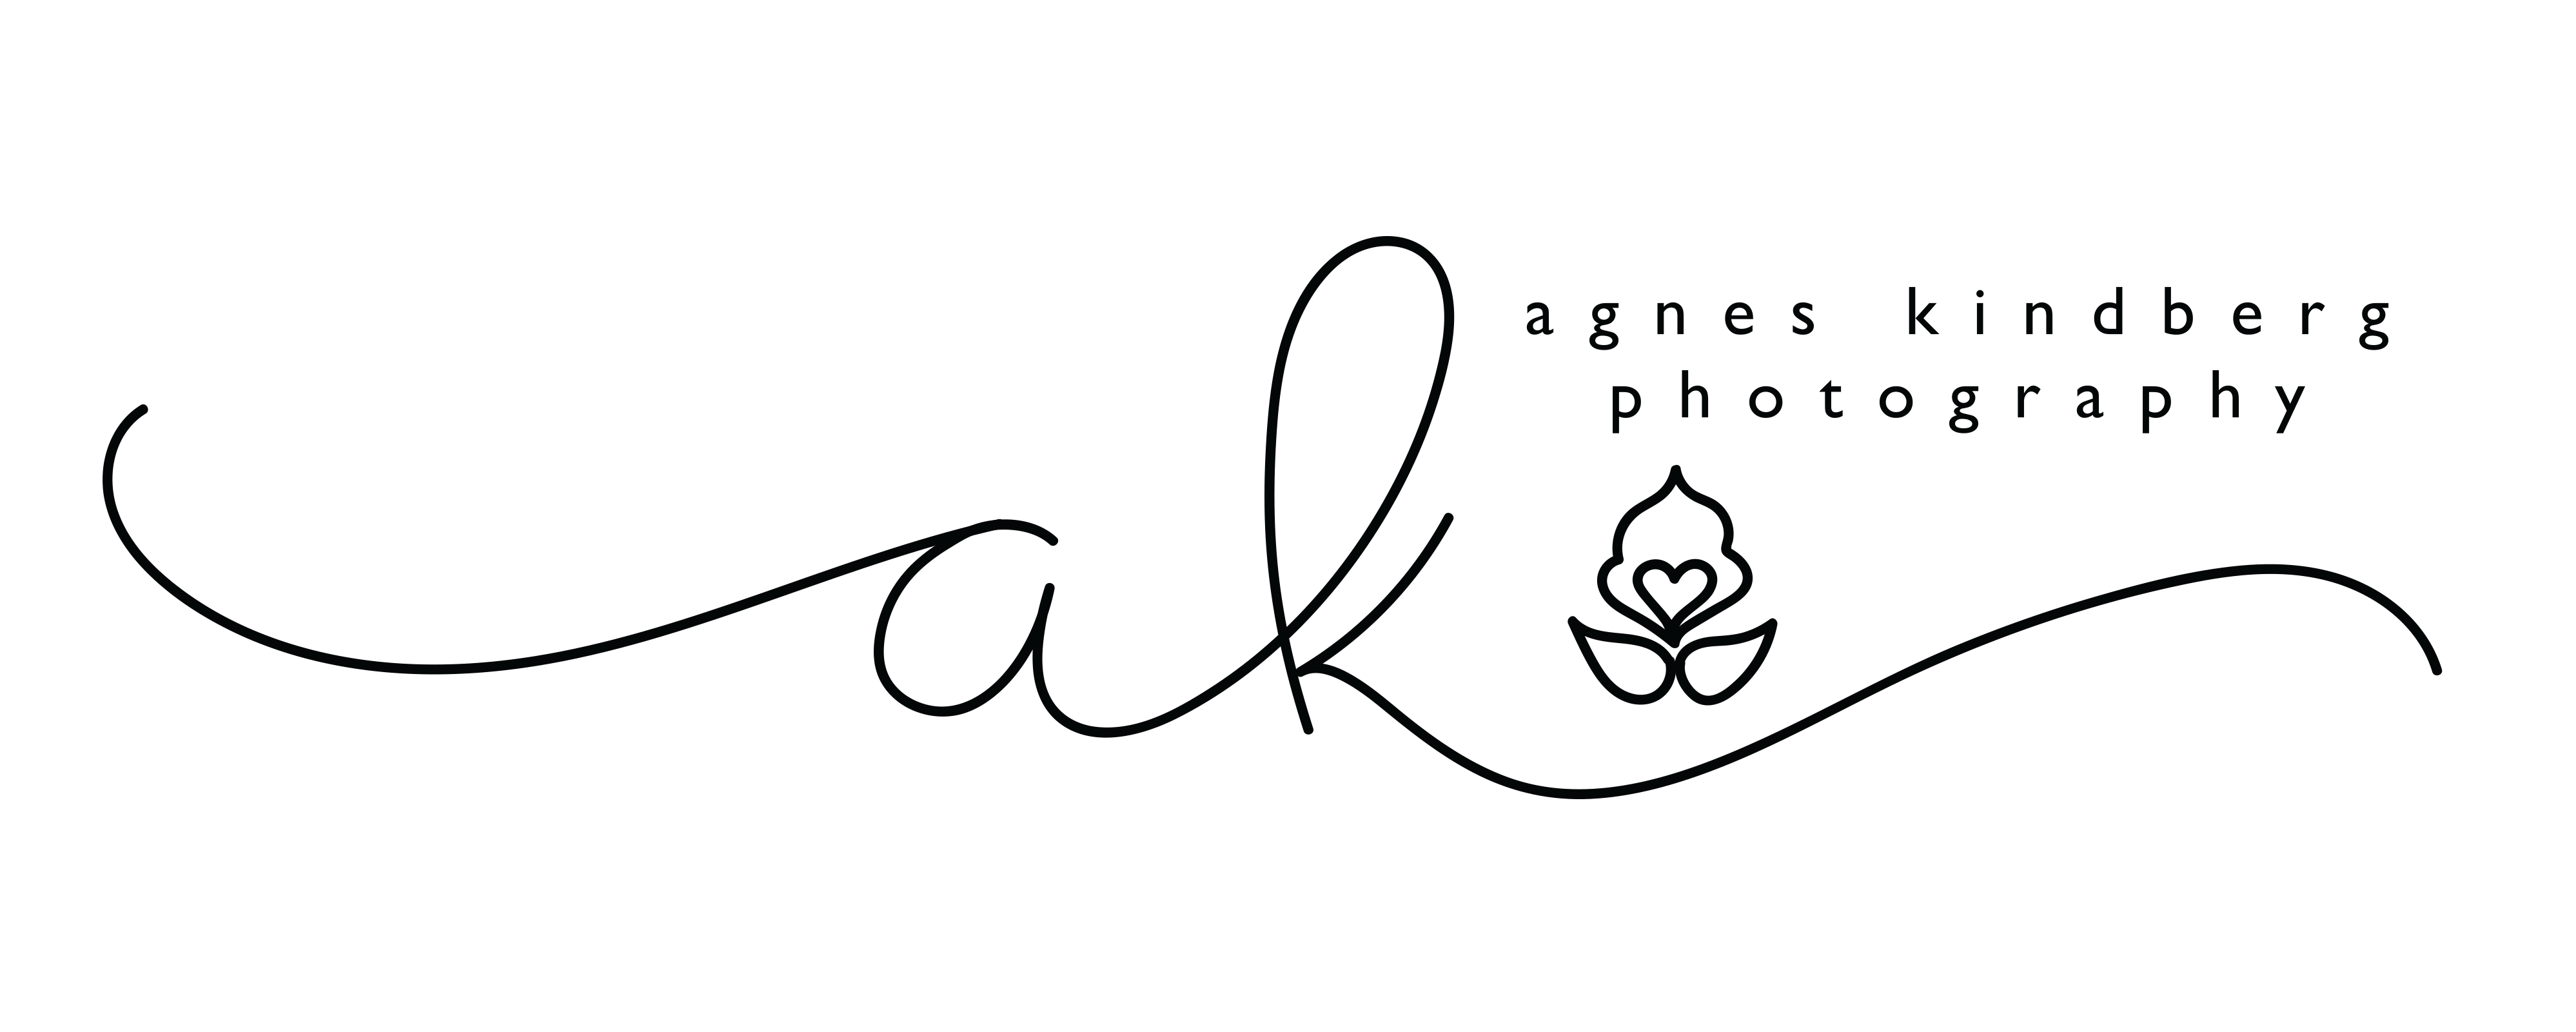 Agnes Kindberg photography logo with lotus flower icon.